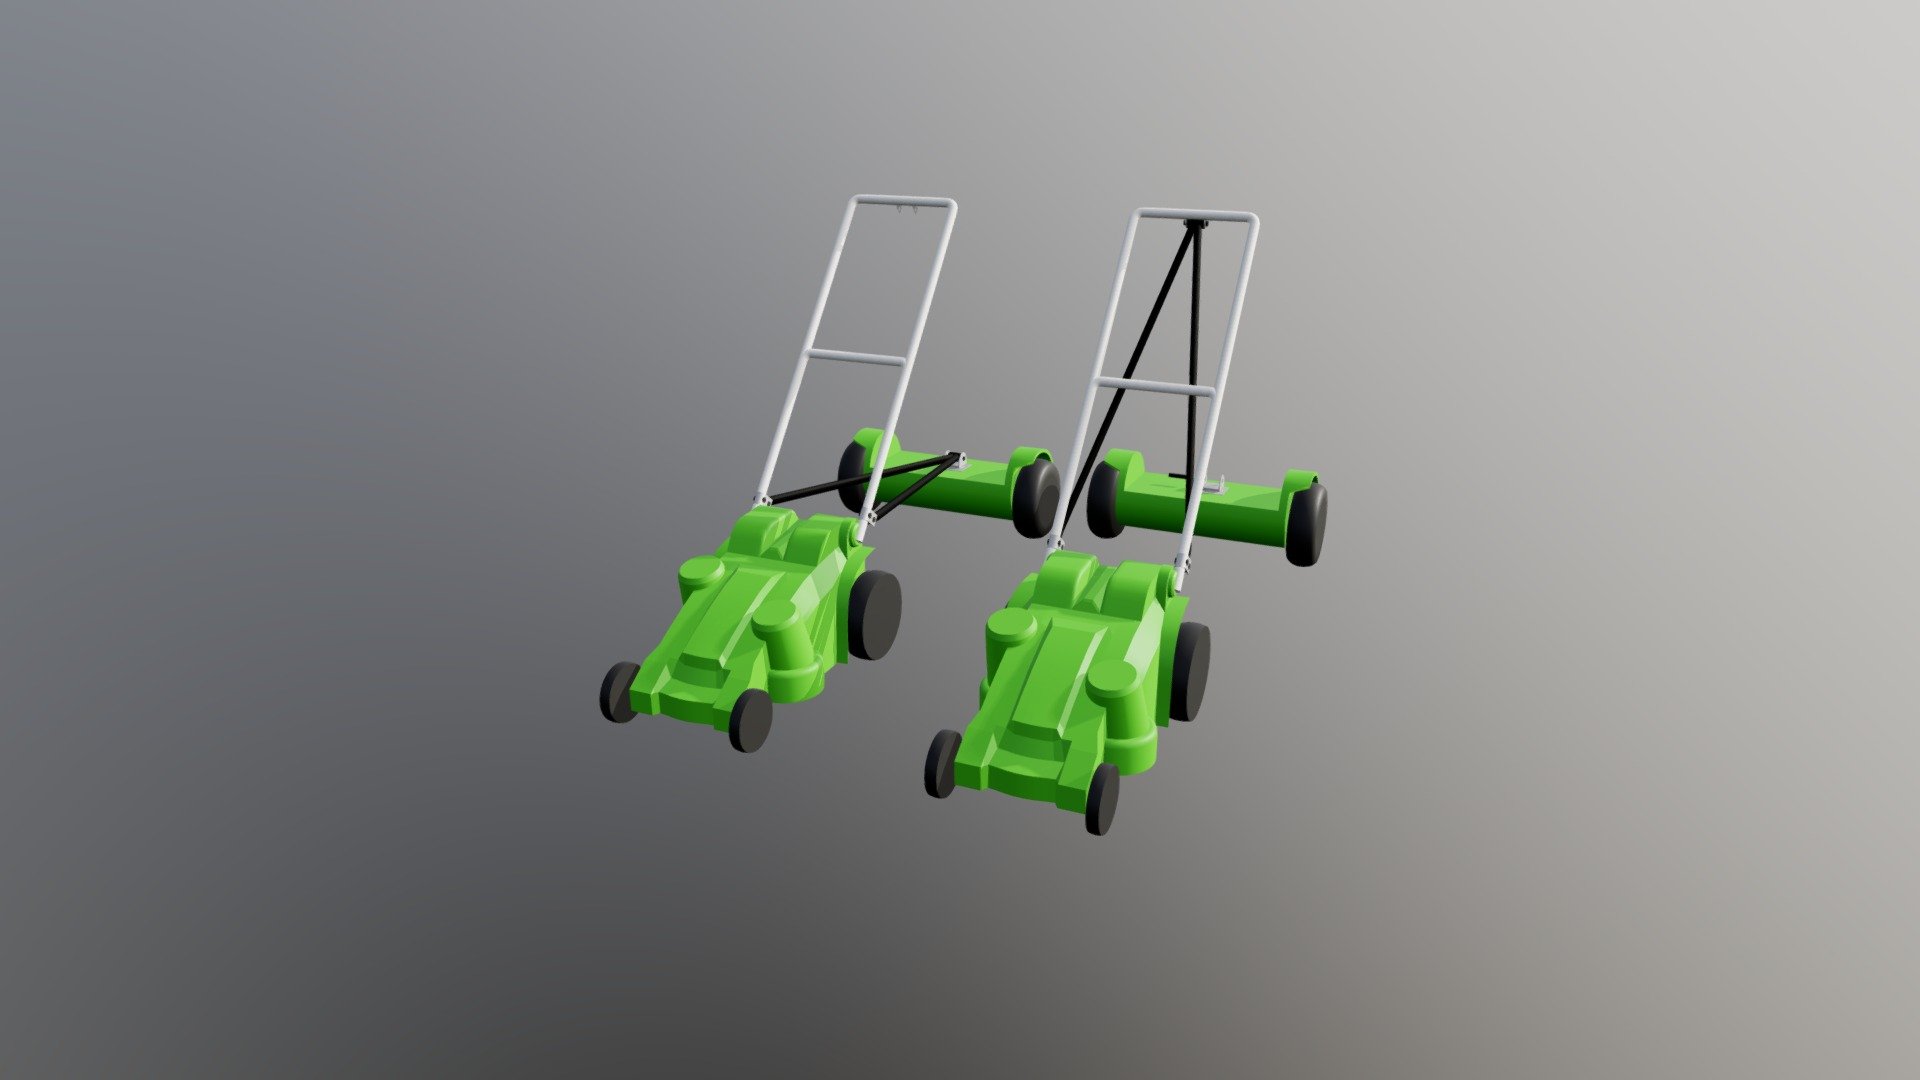 Tosaerba/Hoverboard v2 - 3D model by Greensoft 3d model